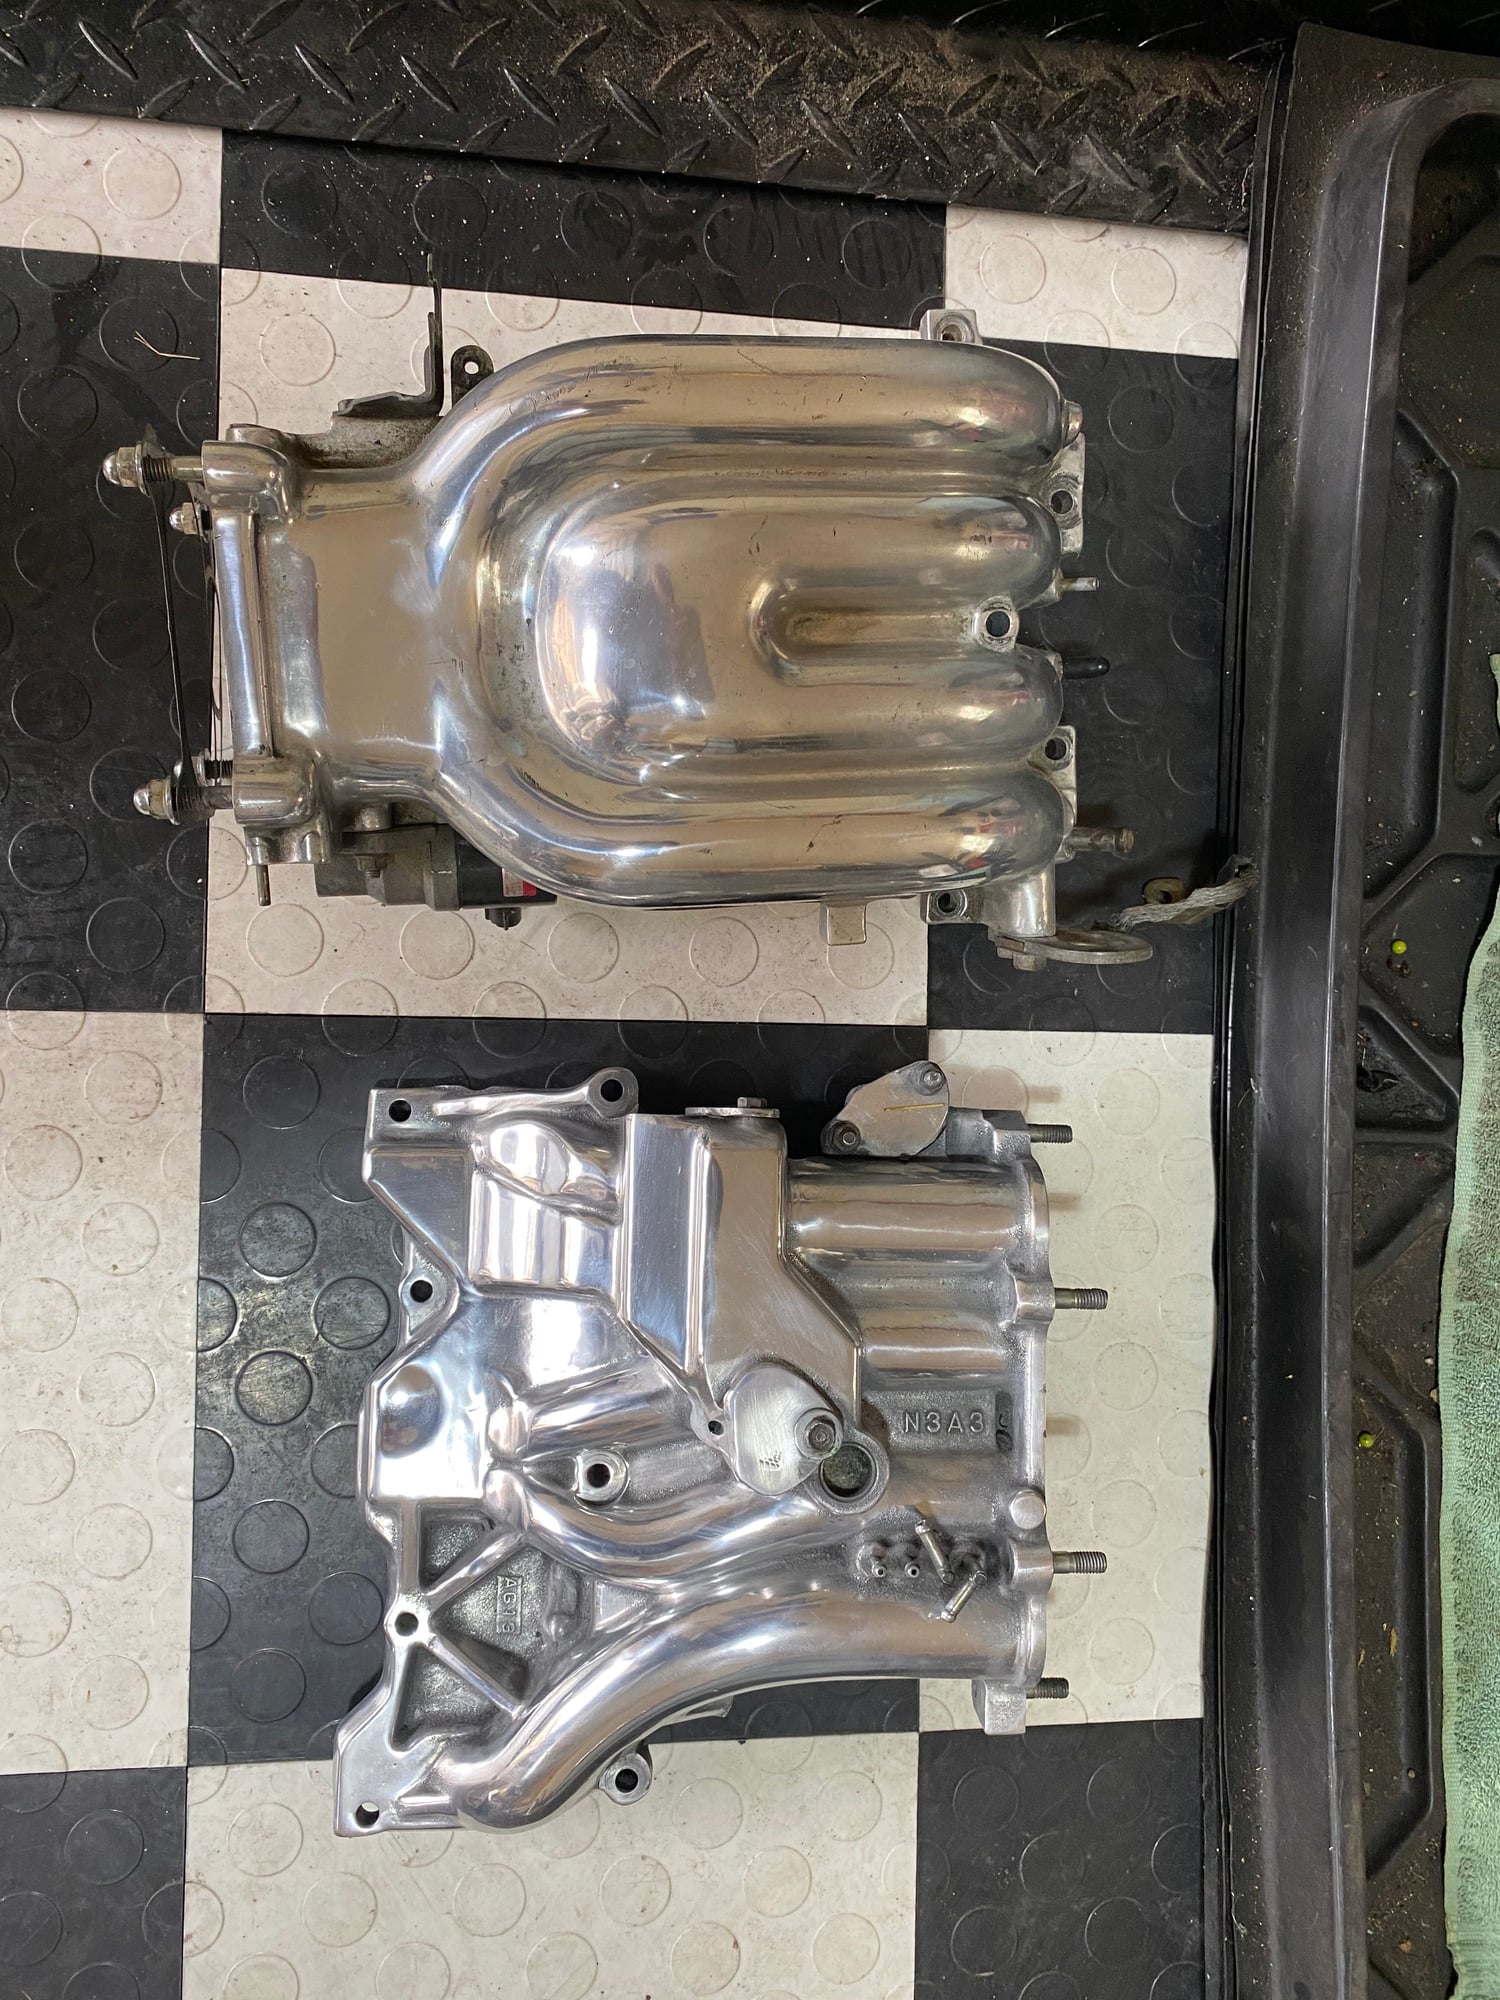 Engine - Intake/Fuel - Polished Parts - Used - 1993 to 1995 Mazda RX-7 - Lantana, TX 76226, United States